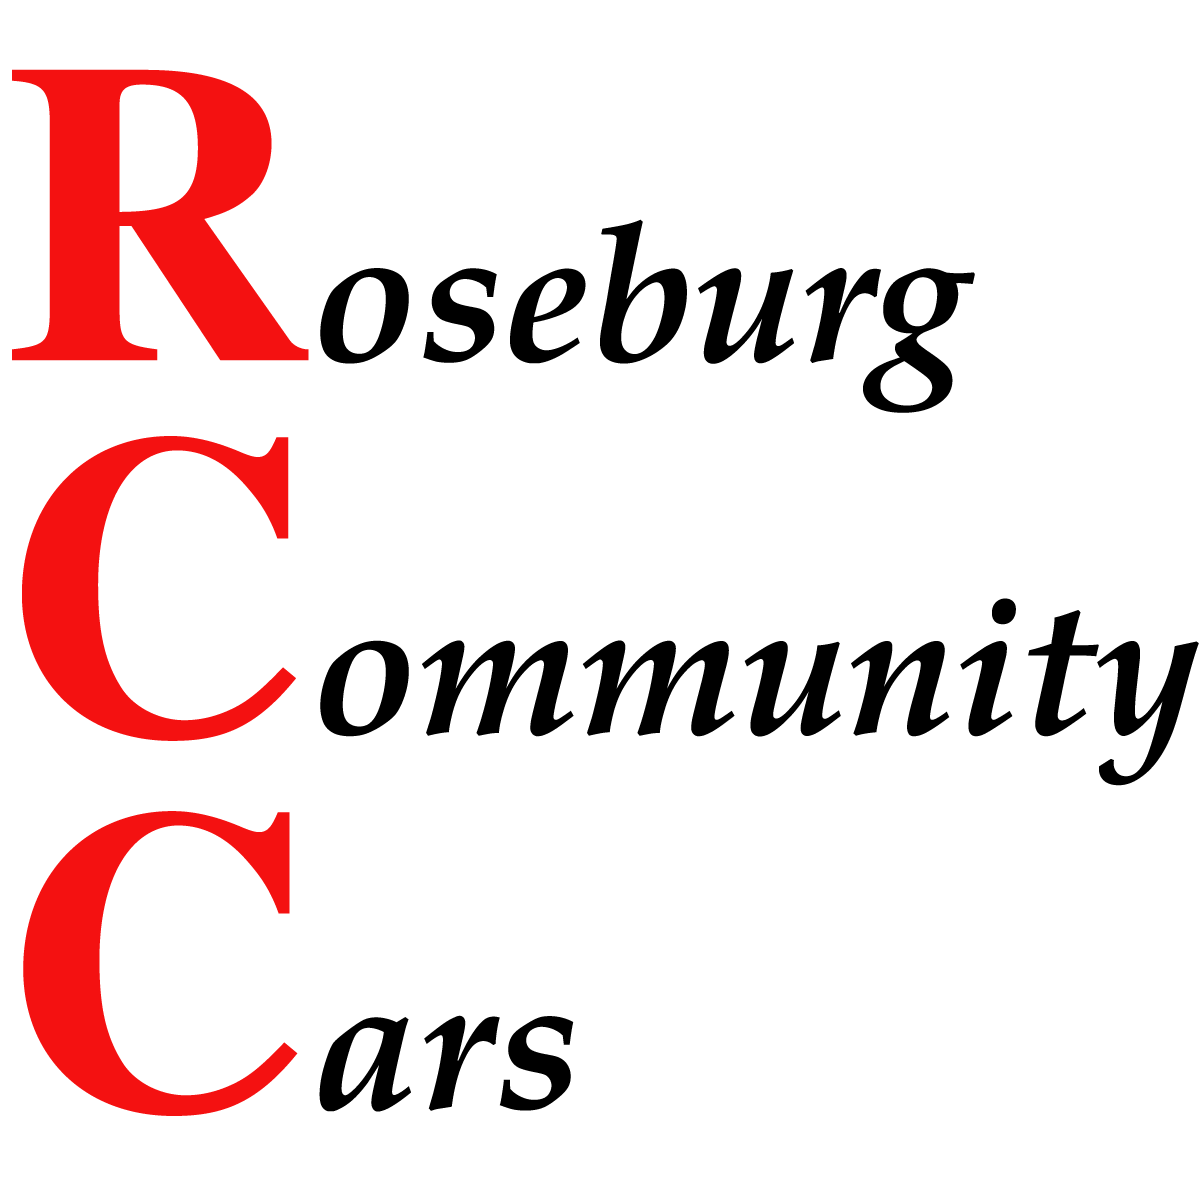 Roseburg Community Cars